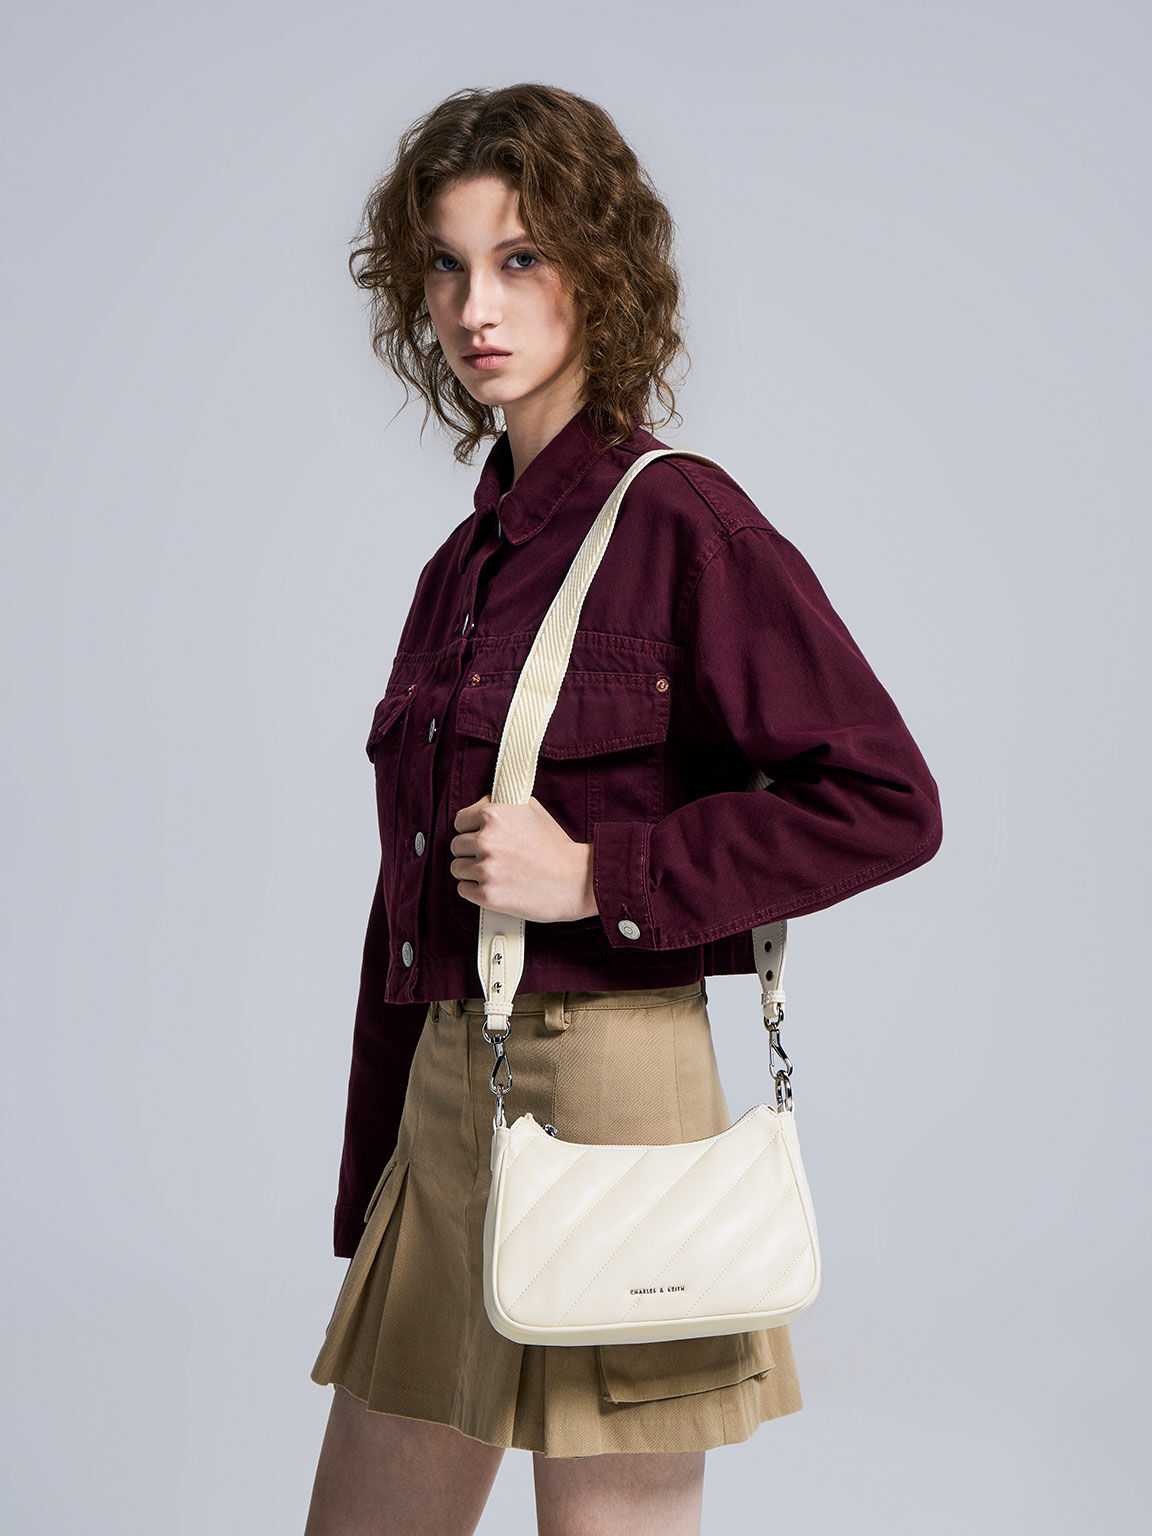 KCC Fabric Ladies Designer Sling Bag, 0.275 kg, Size: 10 Inches